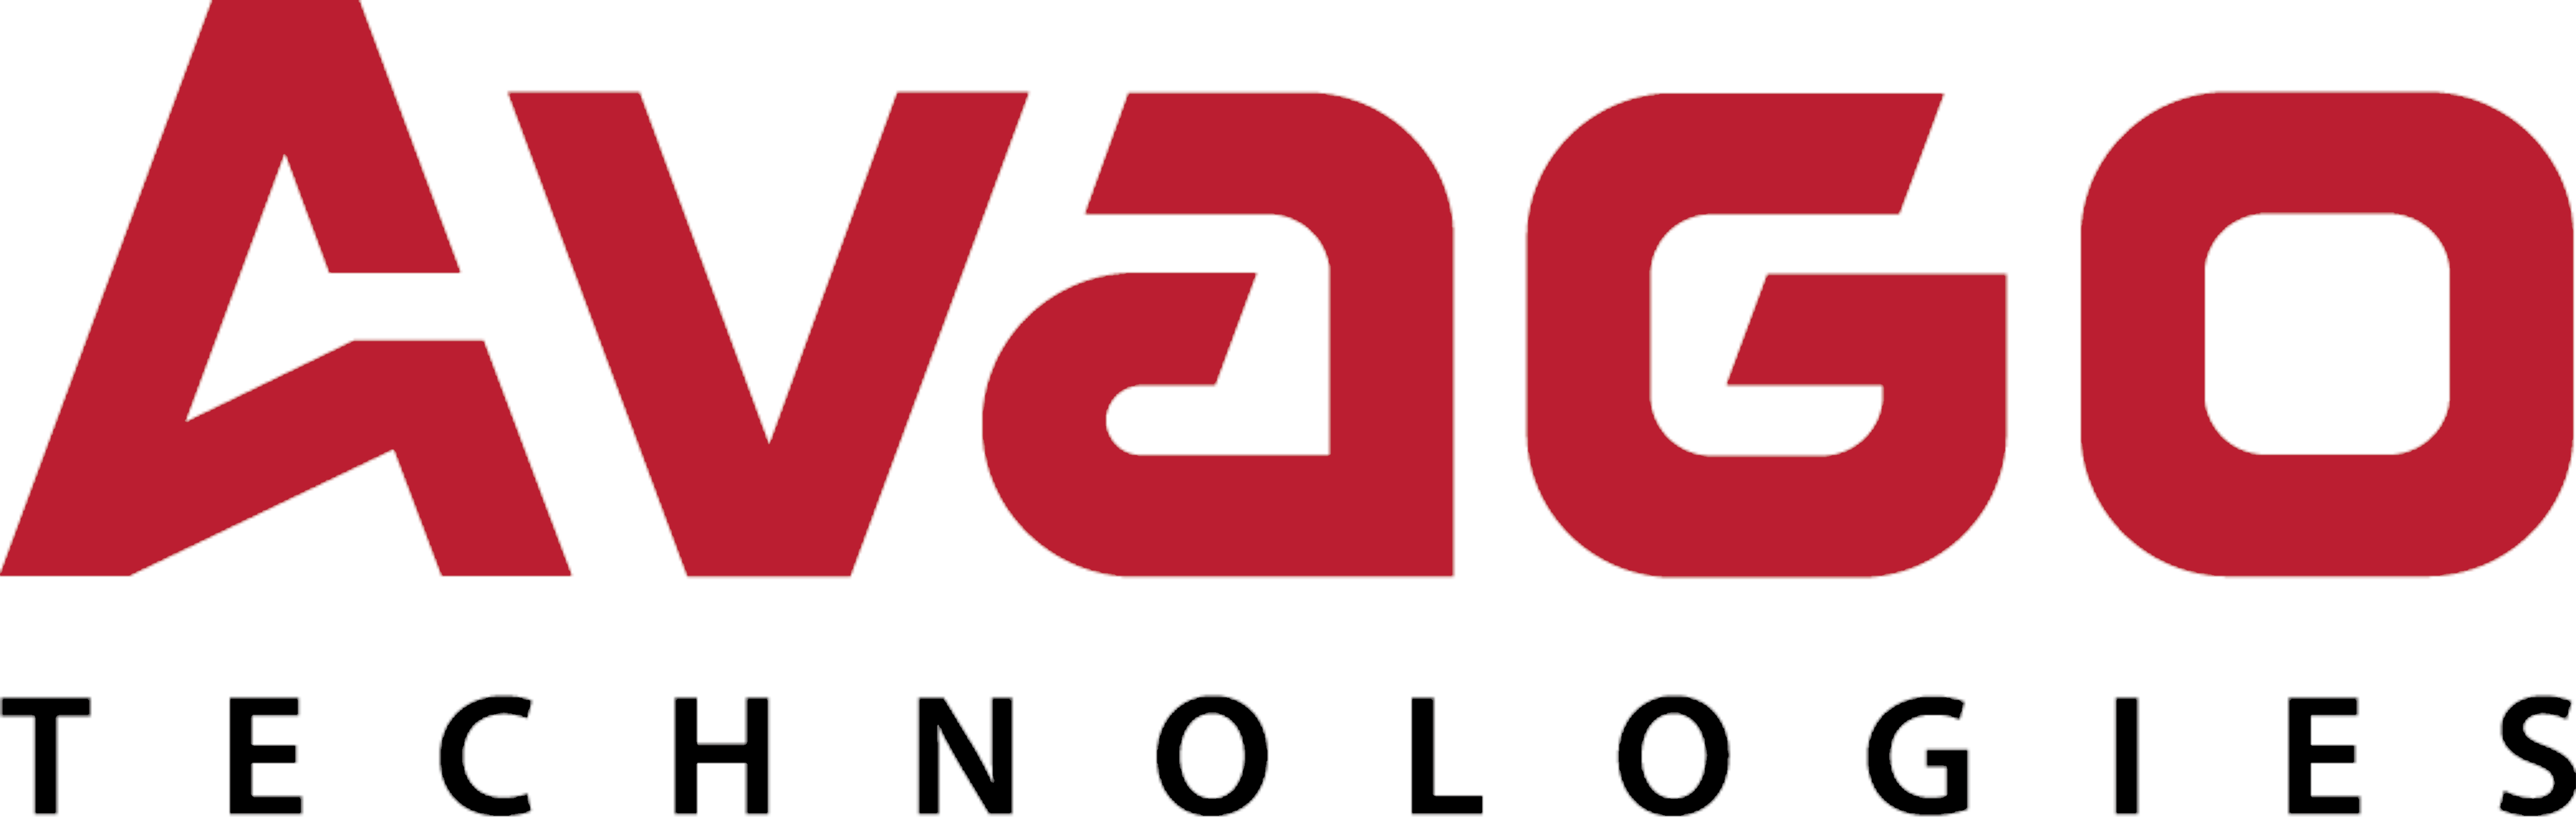 Avago Logo - Avago – Logos Download